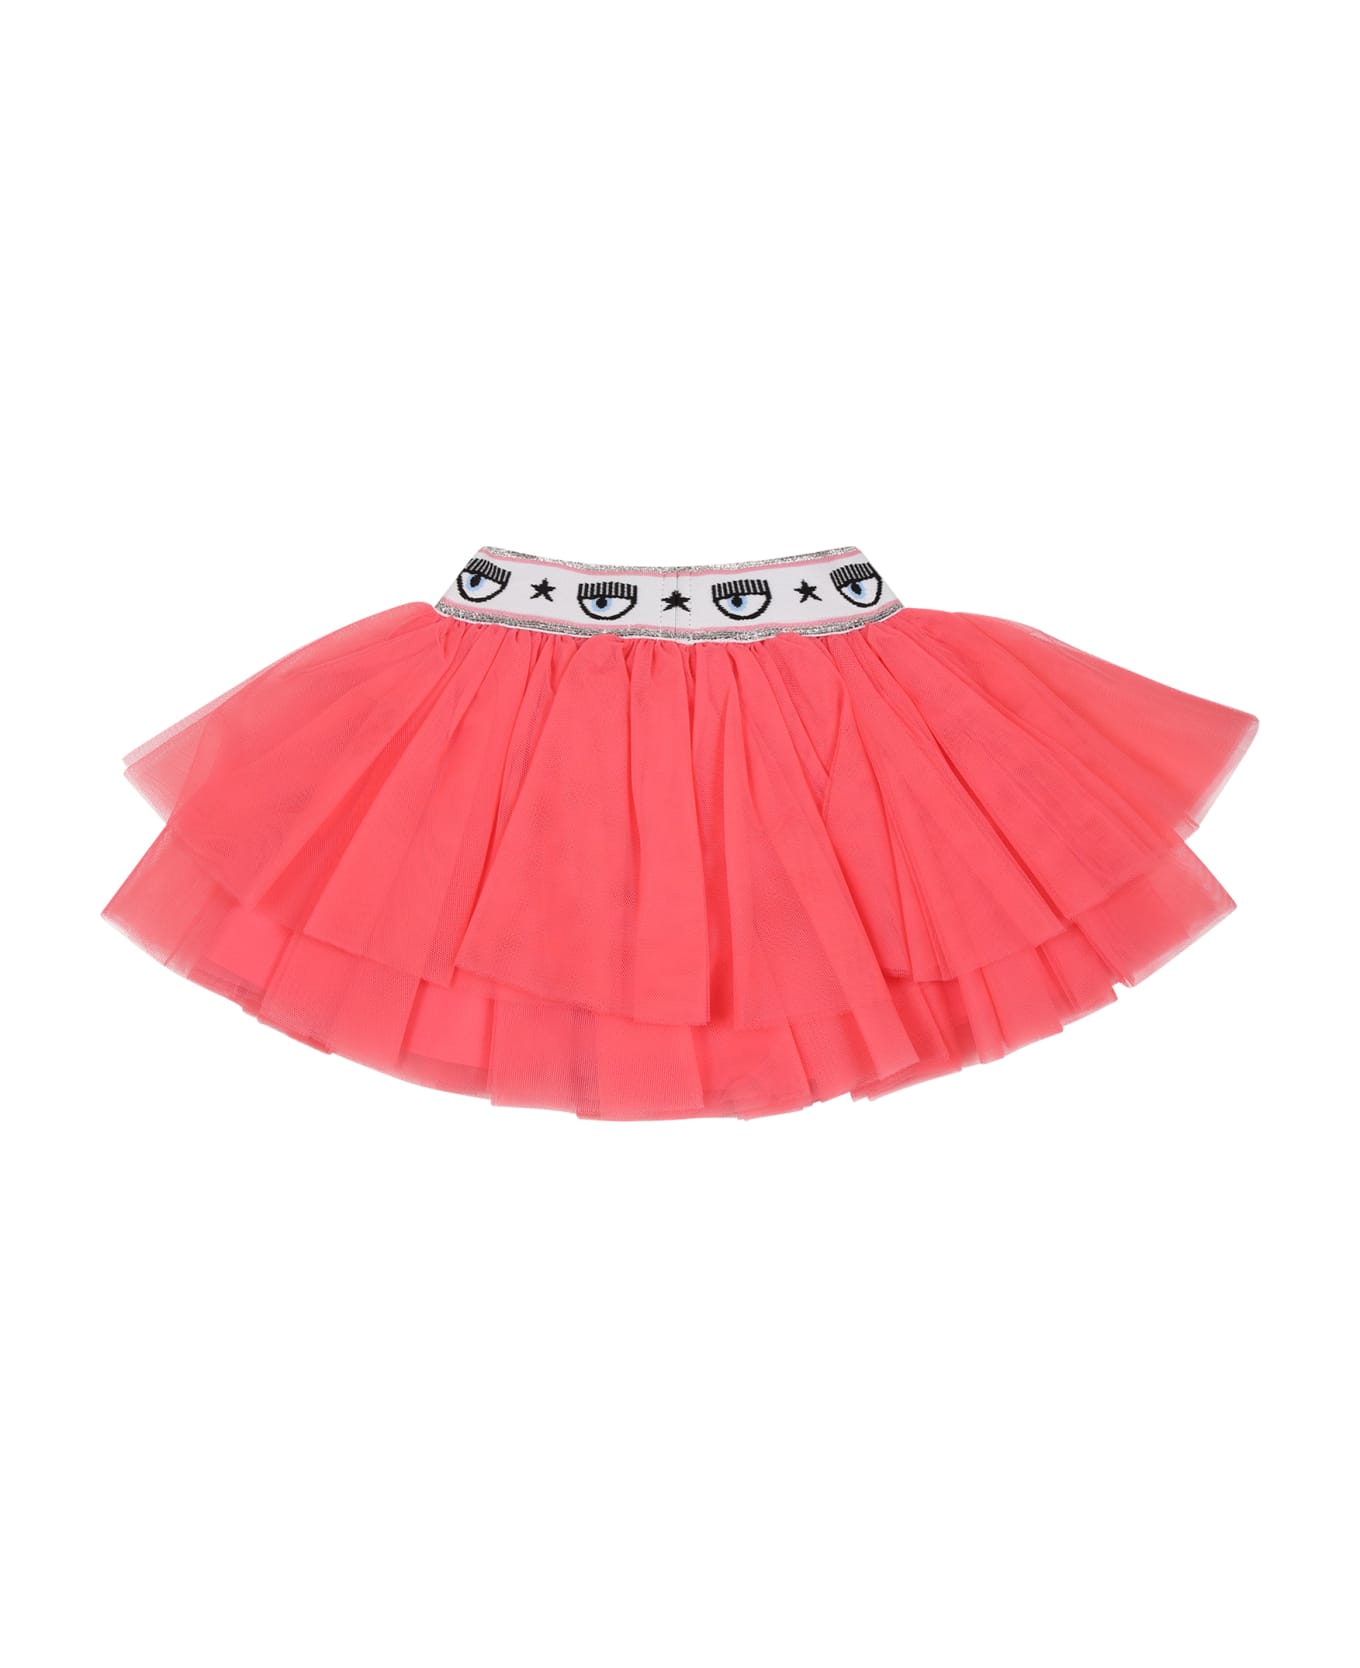 Chiara Ferragni Pink Skirt For Baby Girl With Eyestar - Pink ボトムス